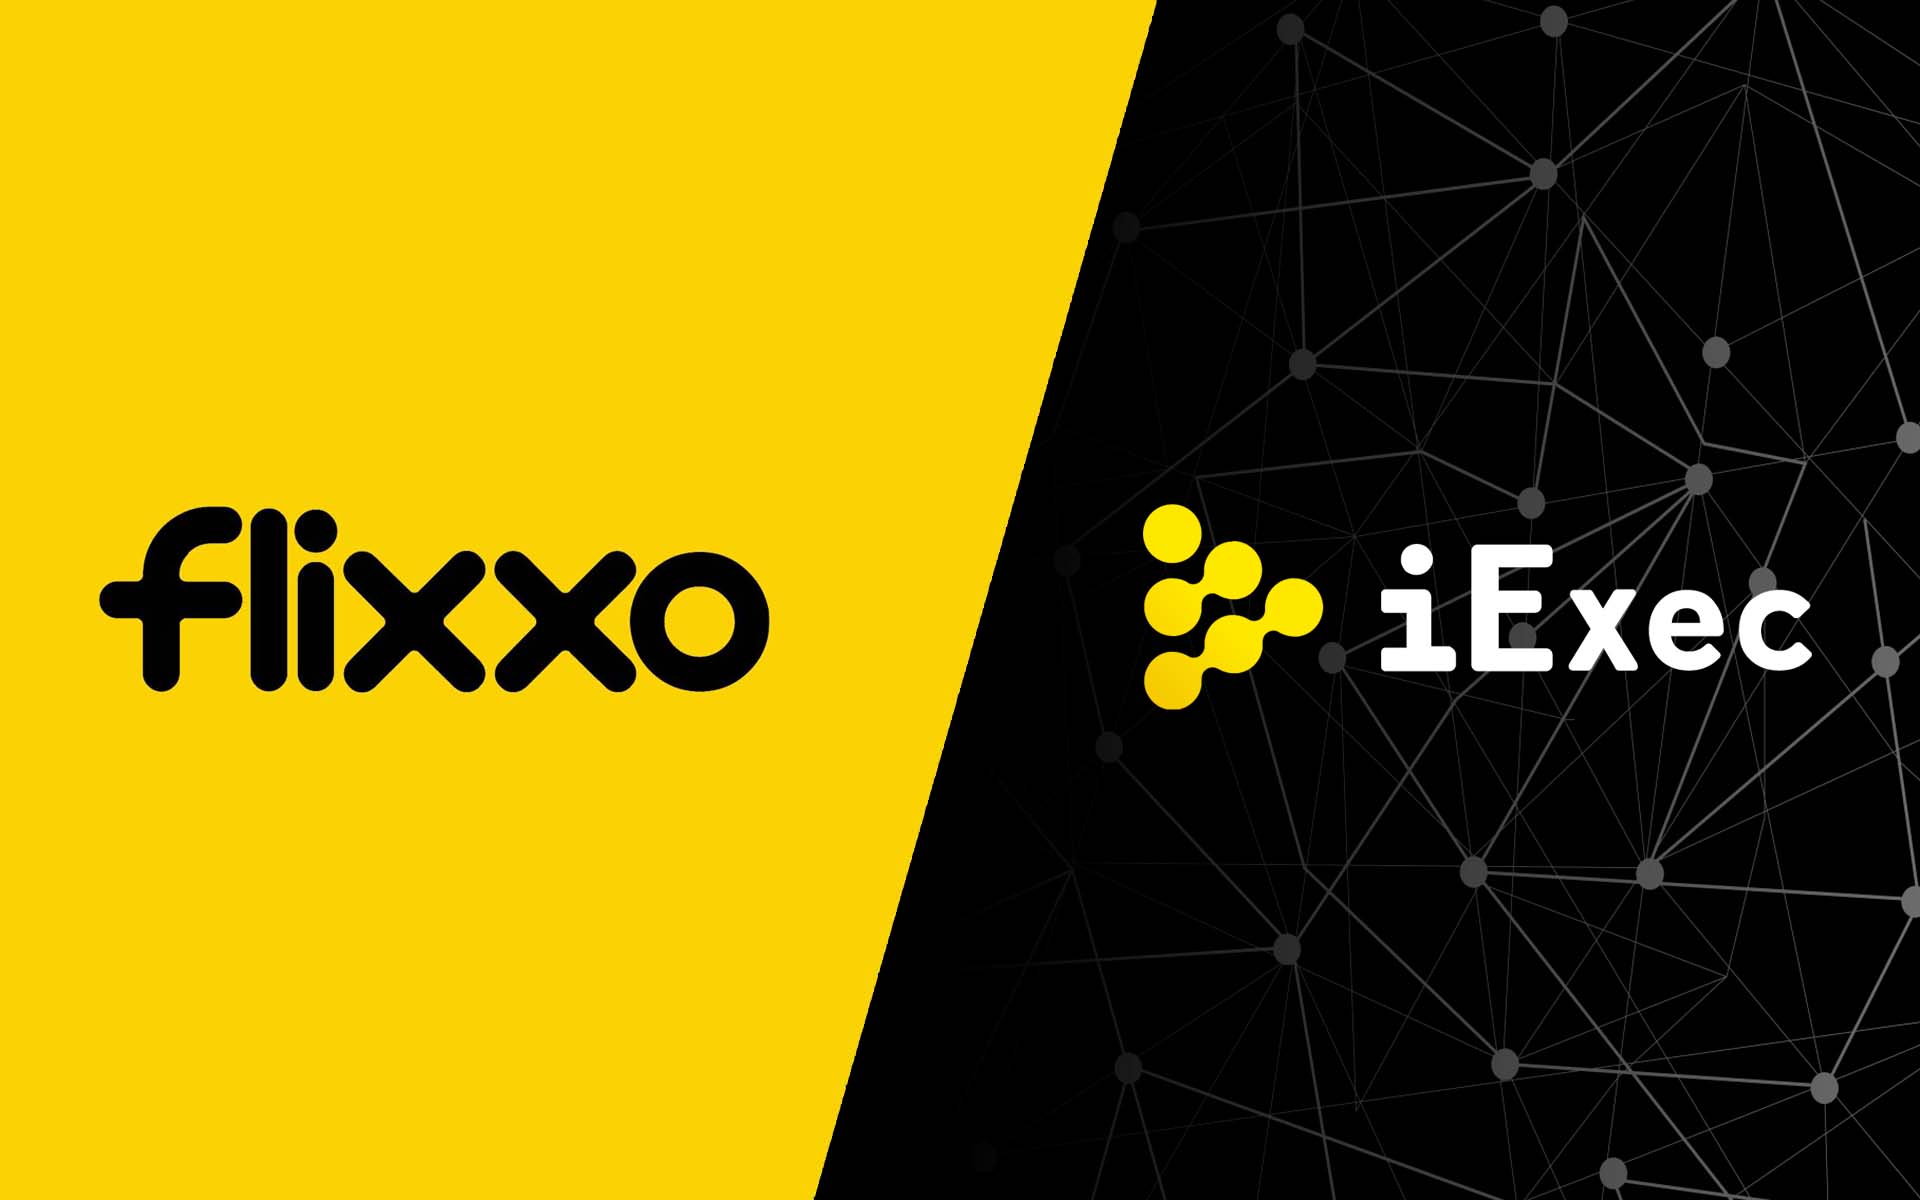 Blockchain-Based Video Sharing Platform Flixxo Announces Partnership with Distributed Computing Network iEx.ec